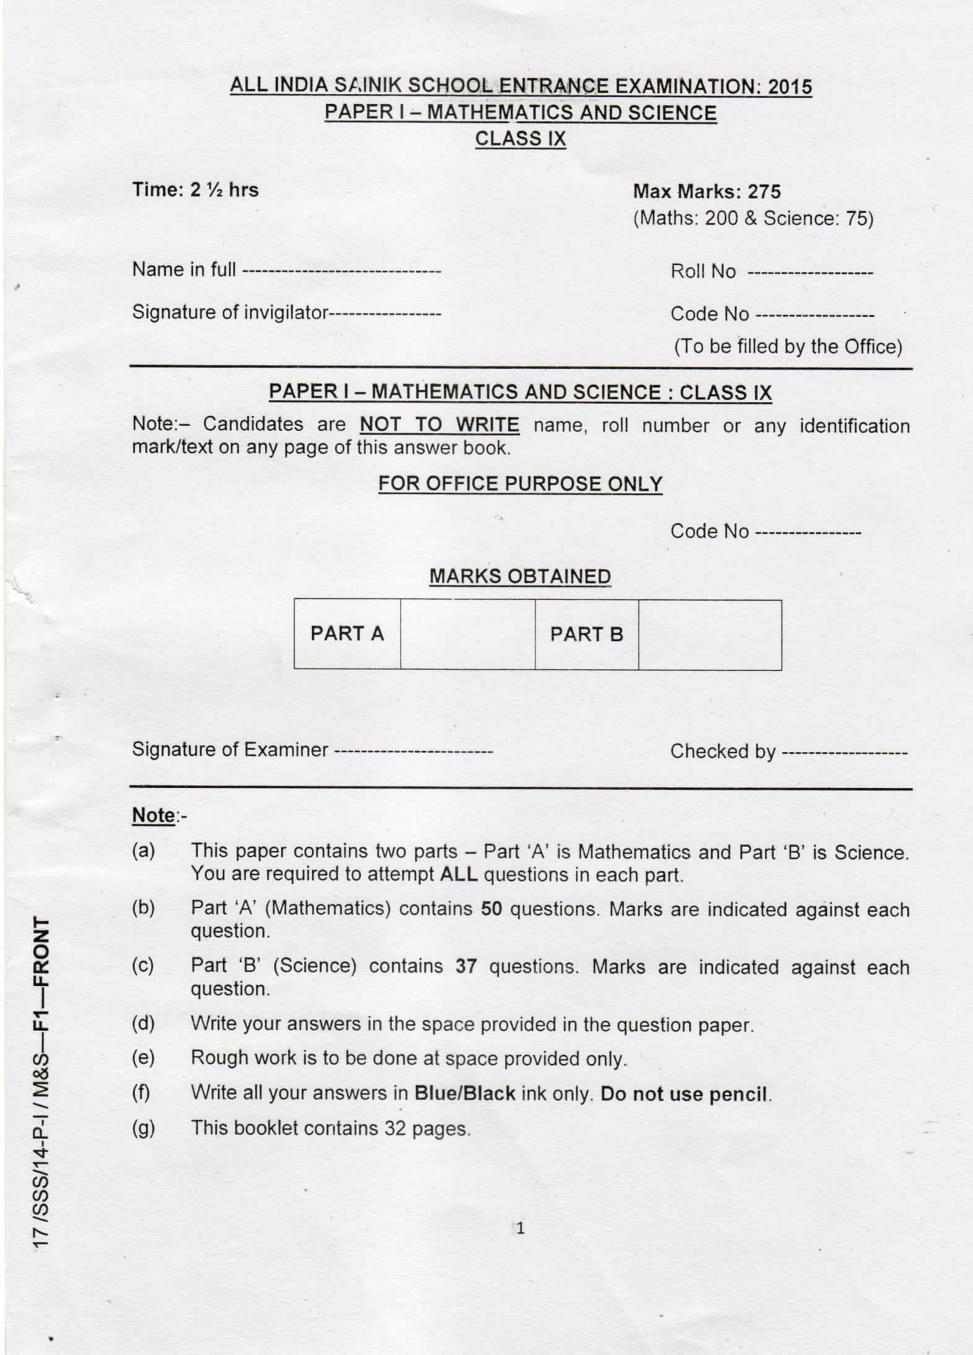 AISSEE 2015 Question Paper for Class 9 | Sainik School Entrance Exam (Paper 1) - Page 1